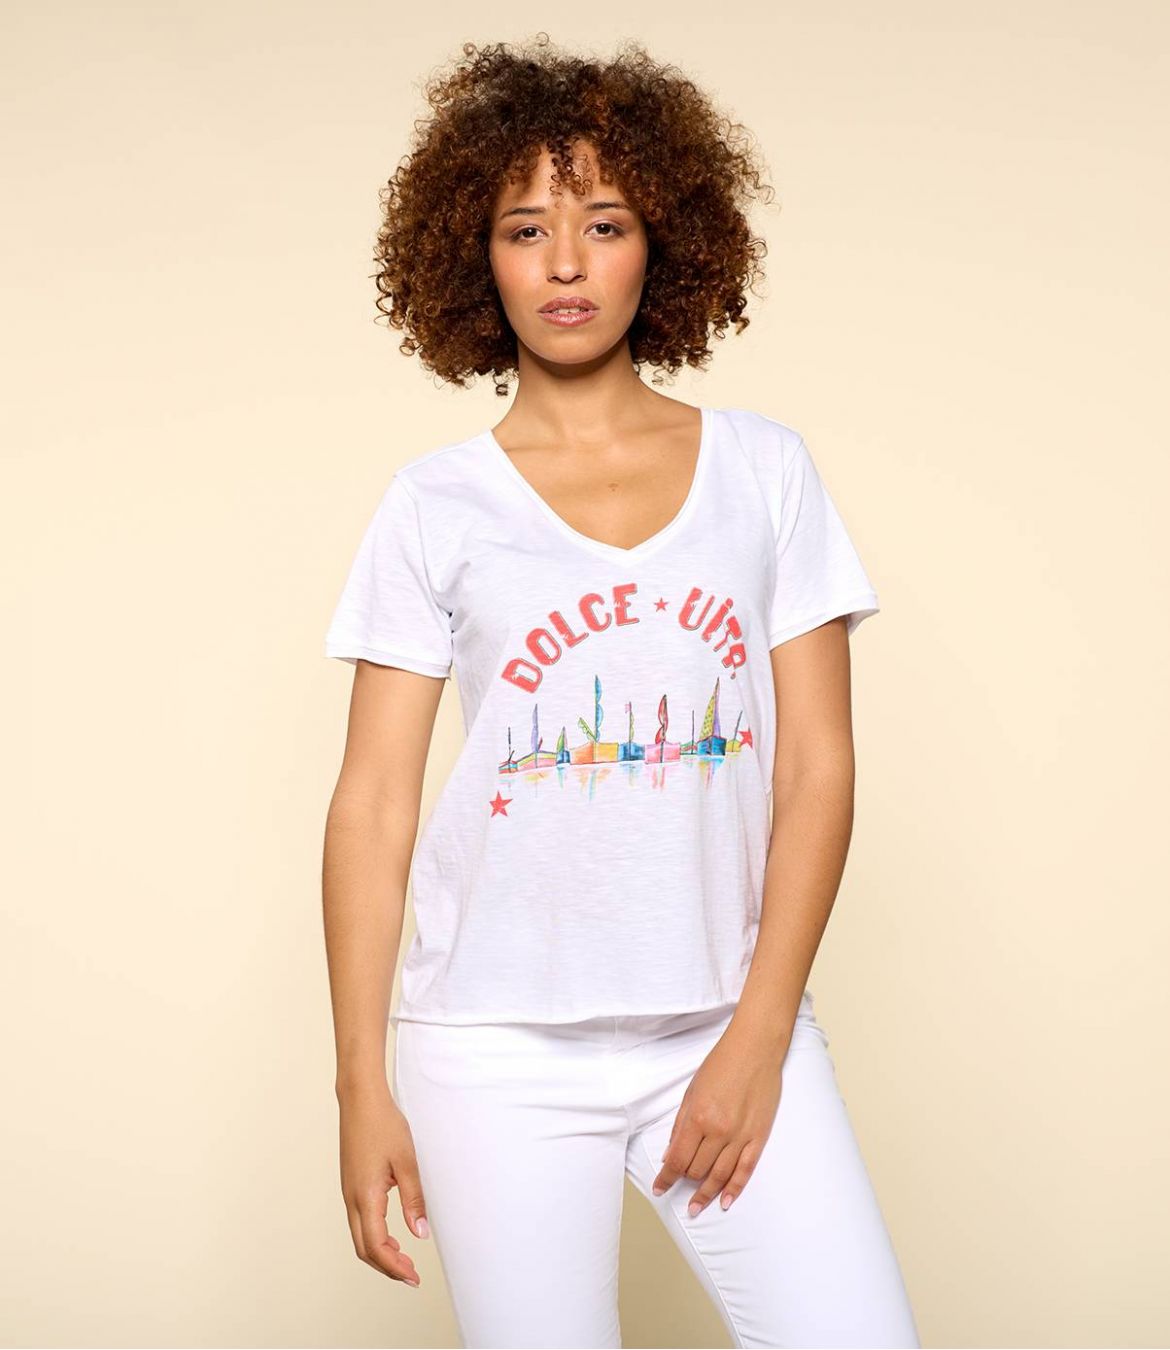 VITA BLANC M-G T-shirt en Coton bio pour Femme - 1